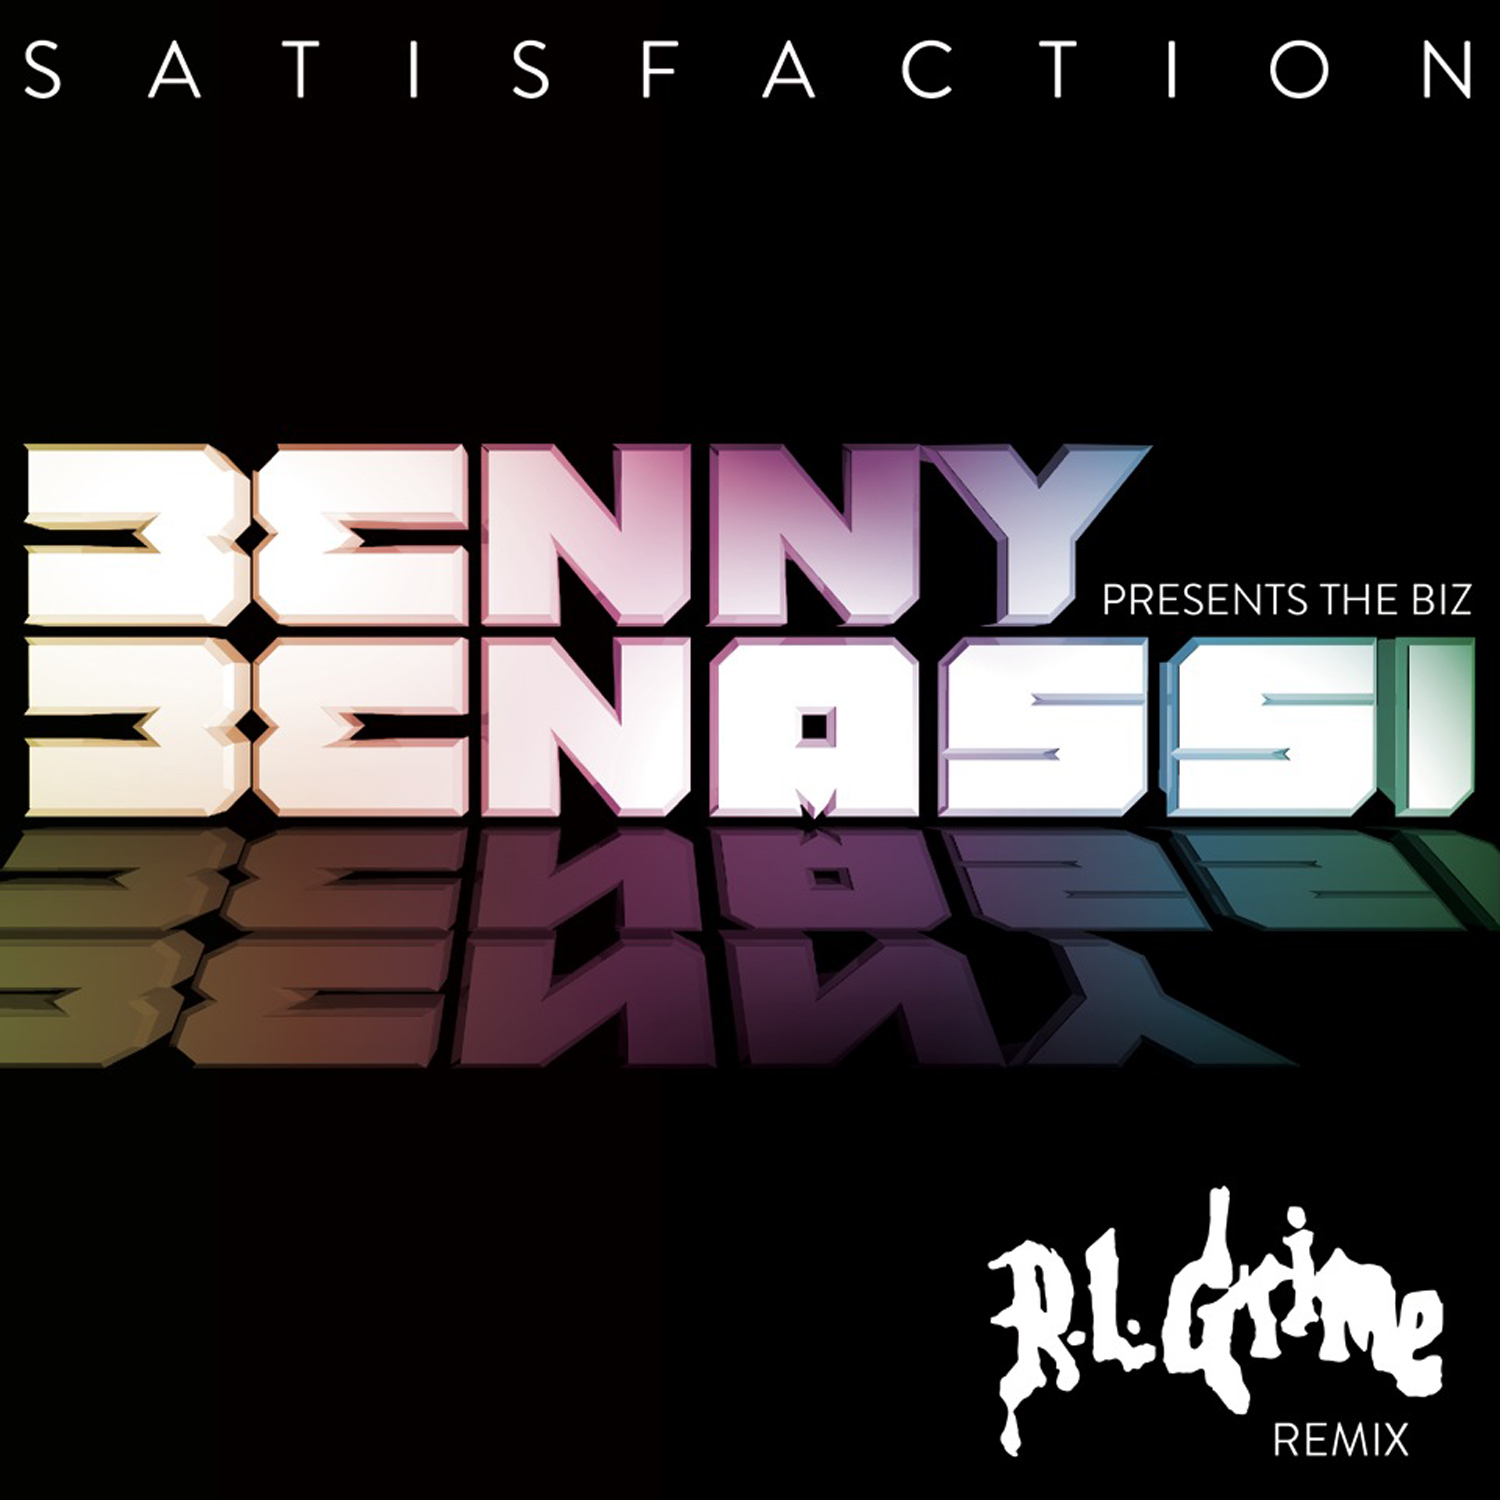 Letöltés Satisfaction (RL Grime Remix) - Benny Benassi (Preview)